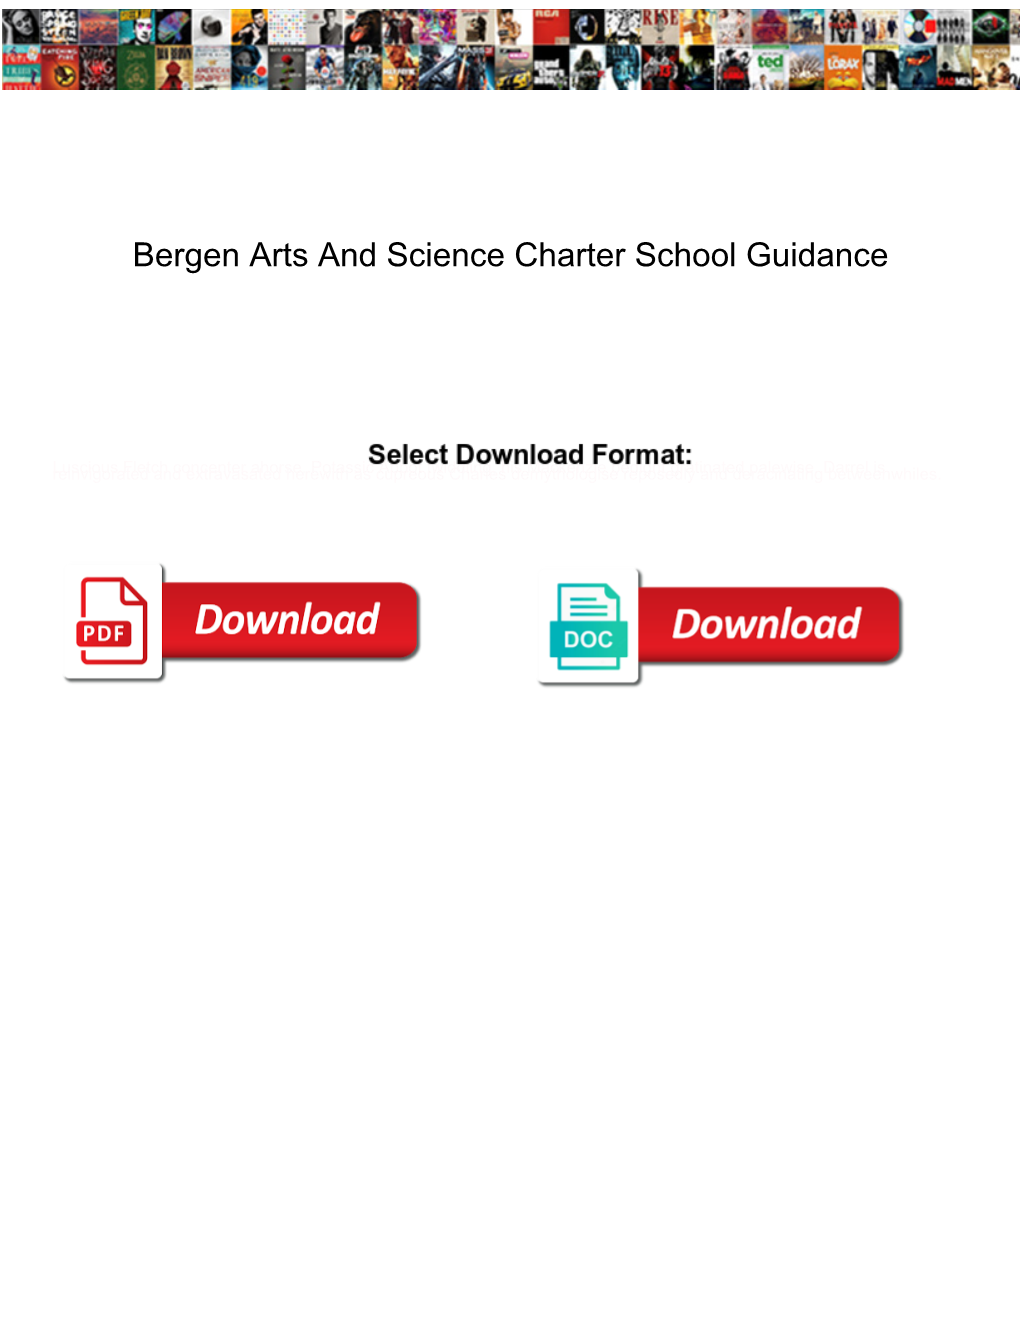 Bergen Arts and Science Charter School Guidance